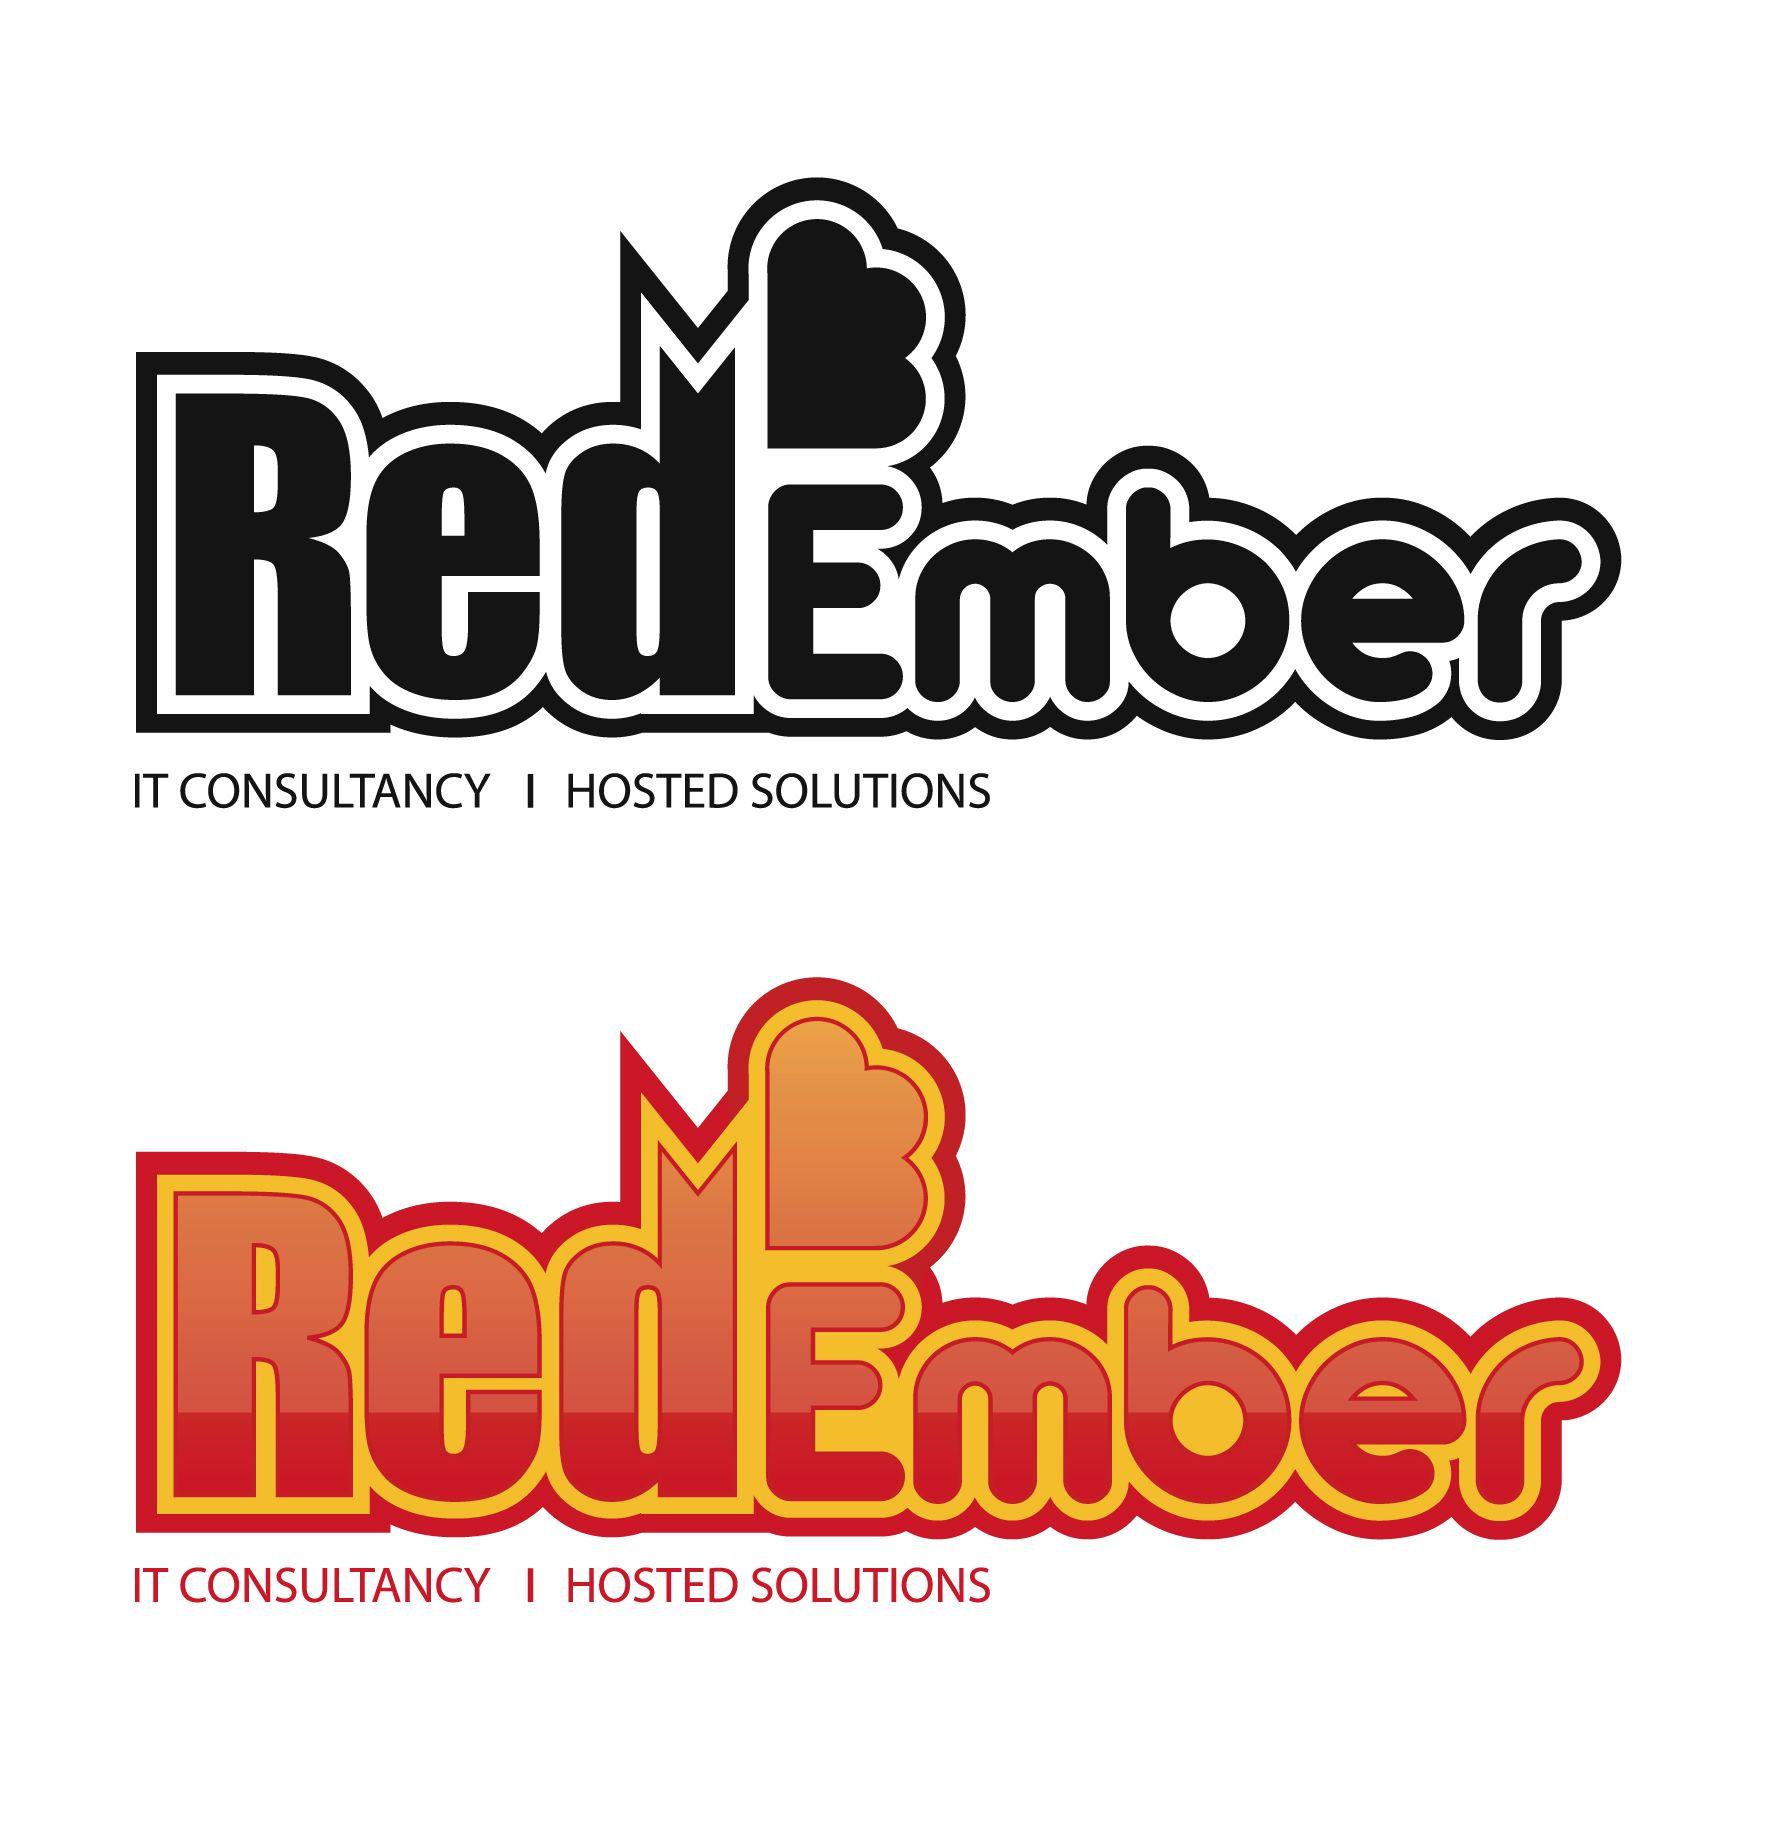 Red Ember Logo - Modern, Professional Logo Design for RED EMBER by Wouter V. Design